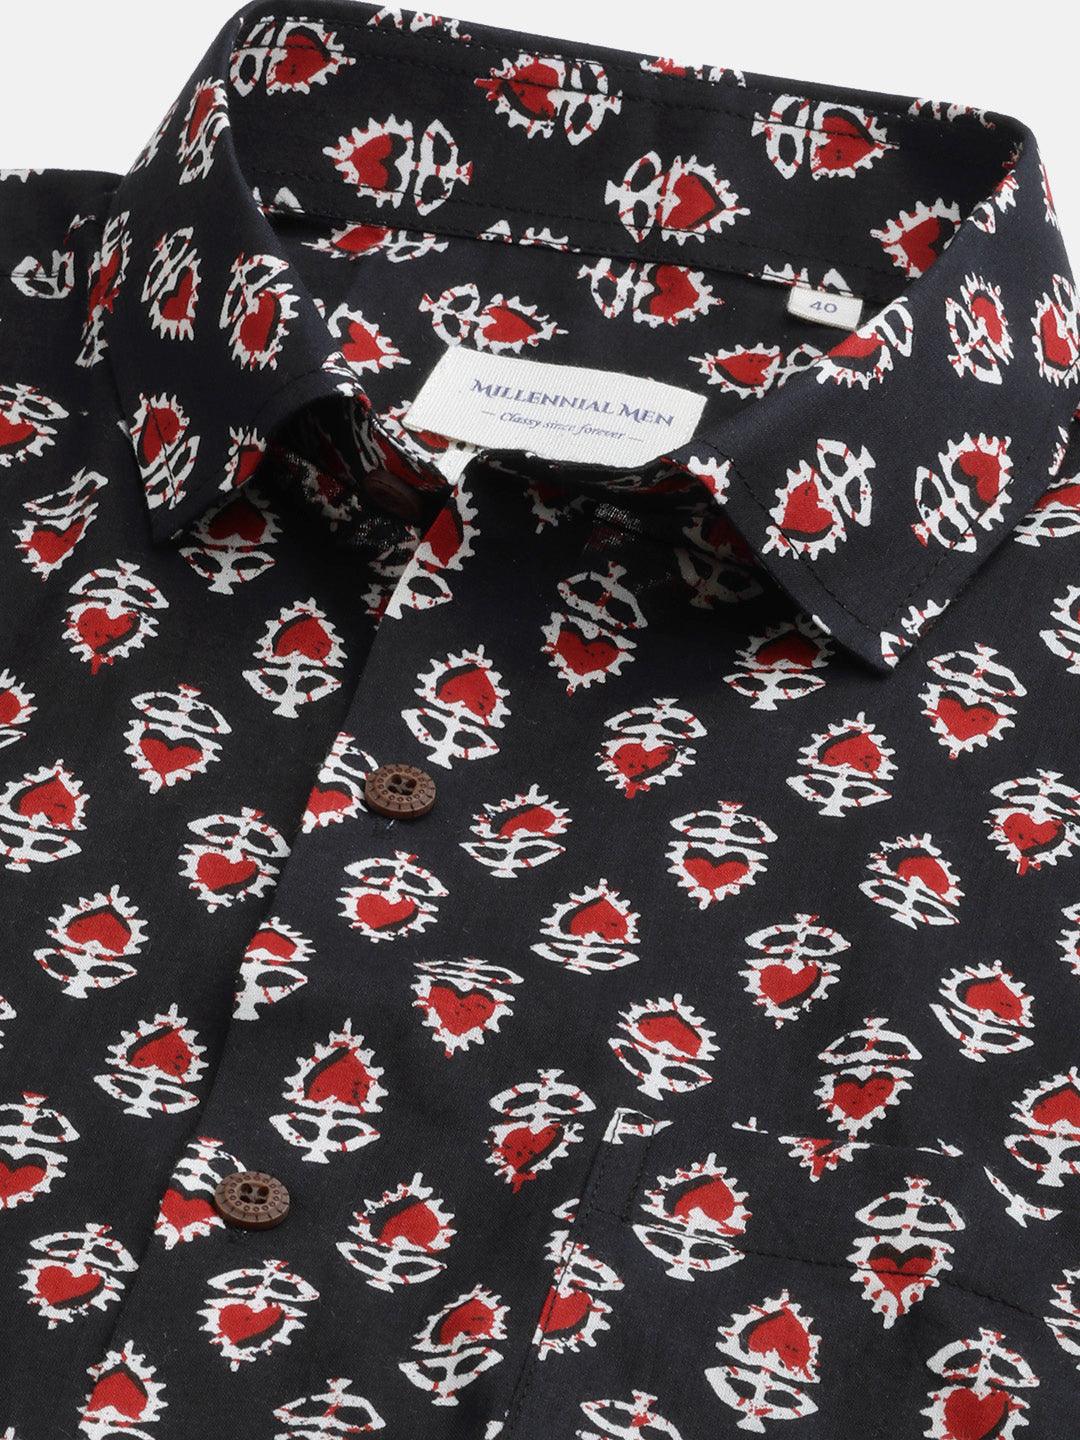 Millennial Men Black & Red Cotton  Half Sleeve Shirt for Men-MMH0167 - divenaworld.com